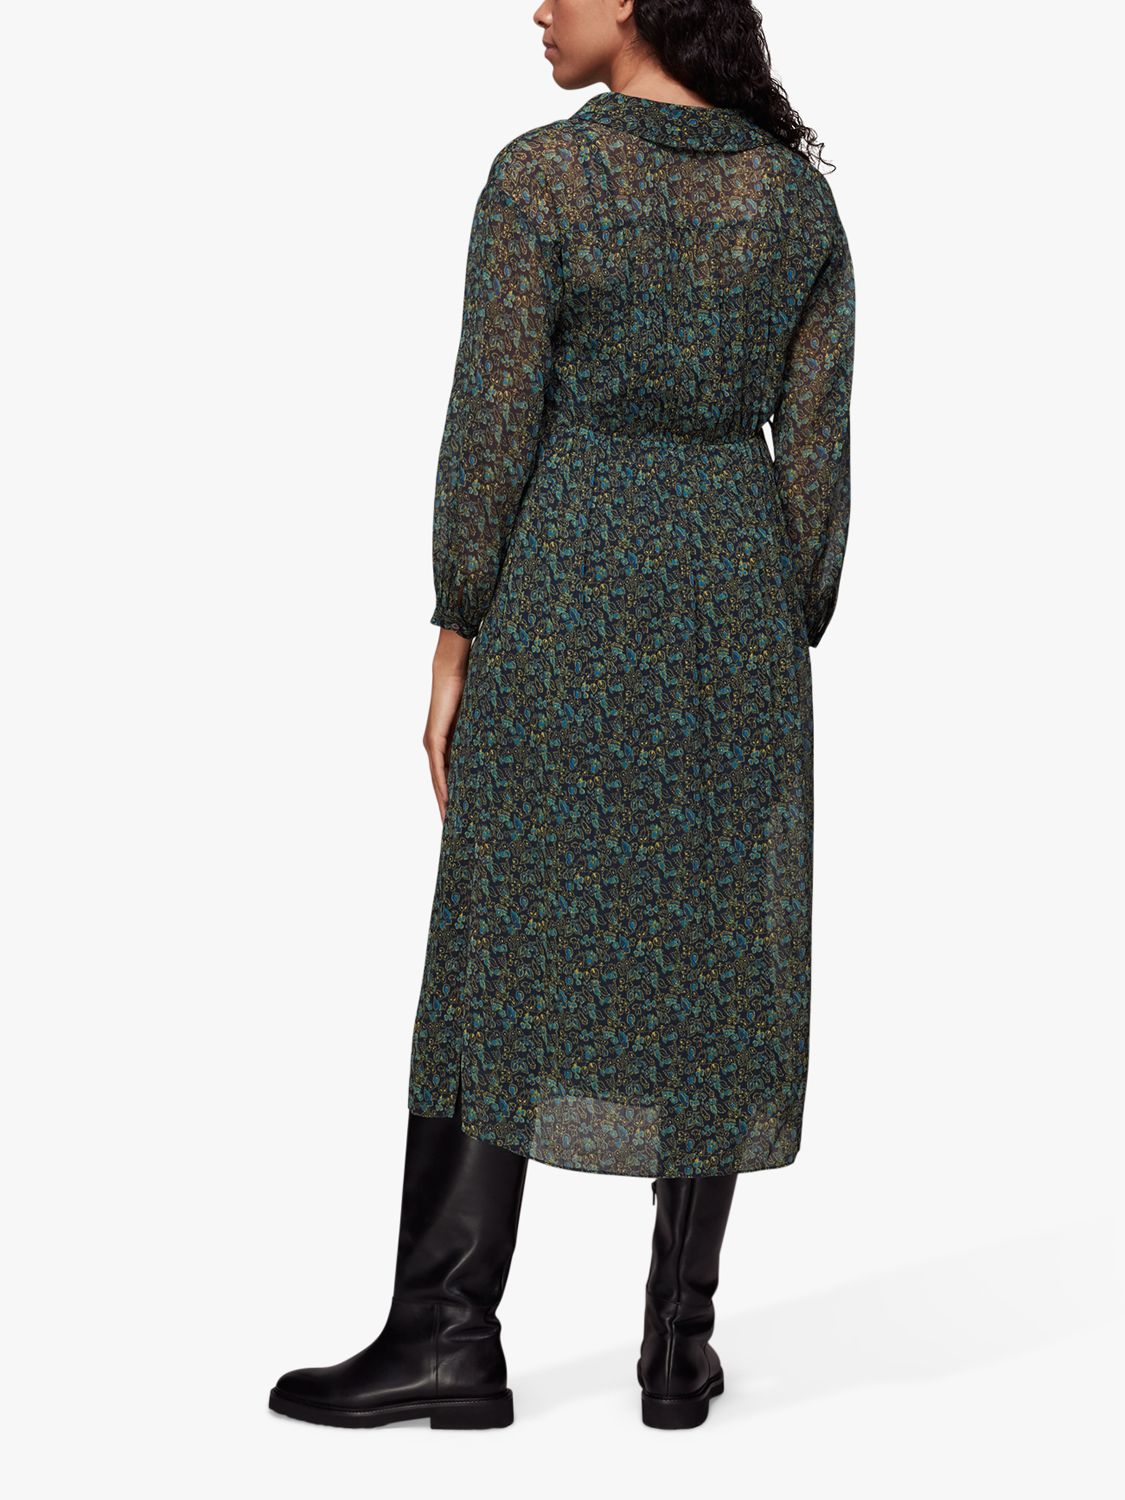 Whistles Stitch Floral Print Midi Dress, Green/Multi, 6